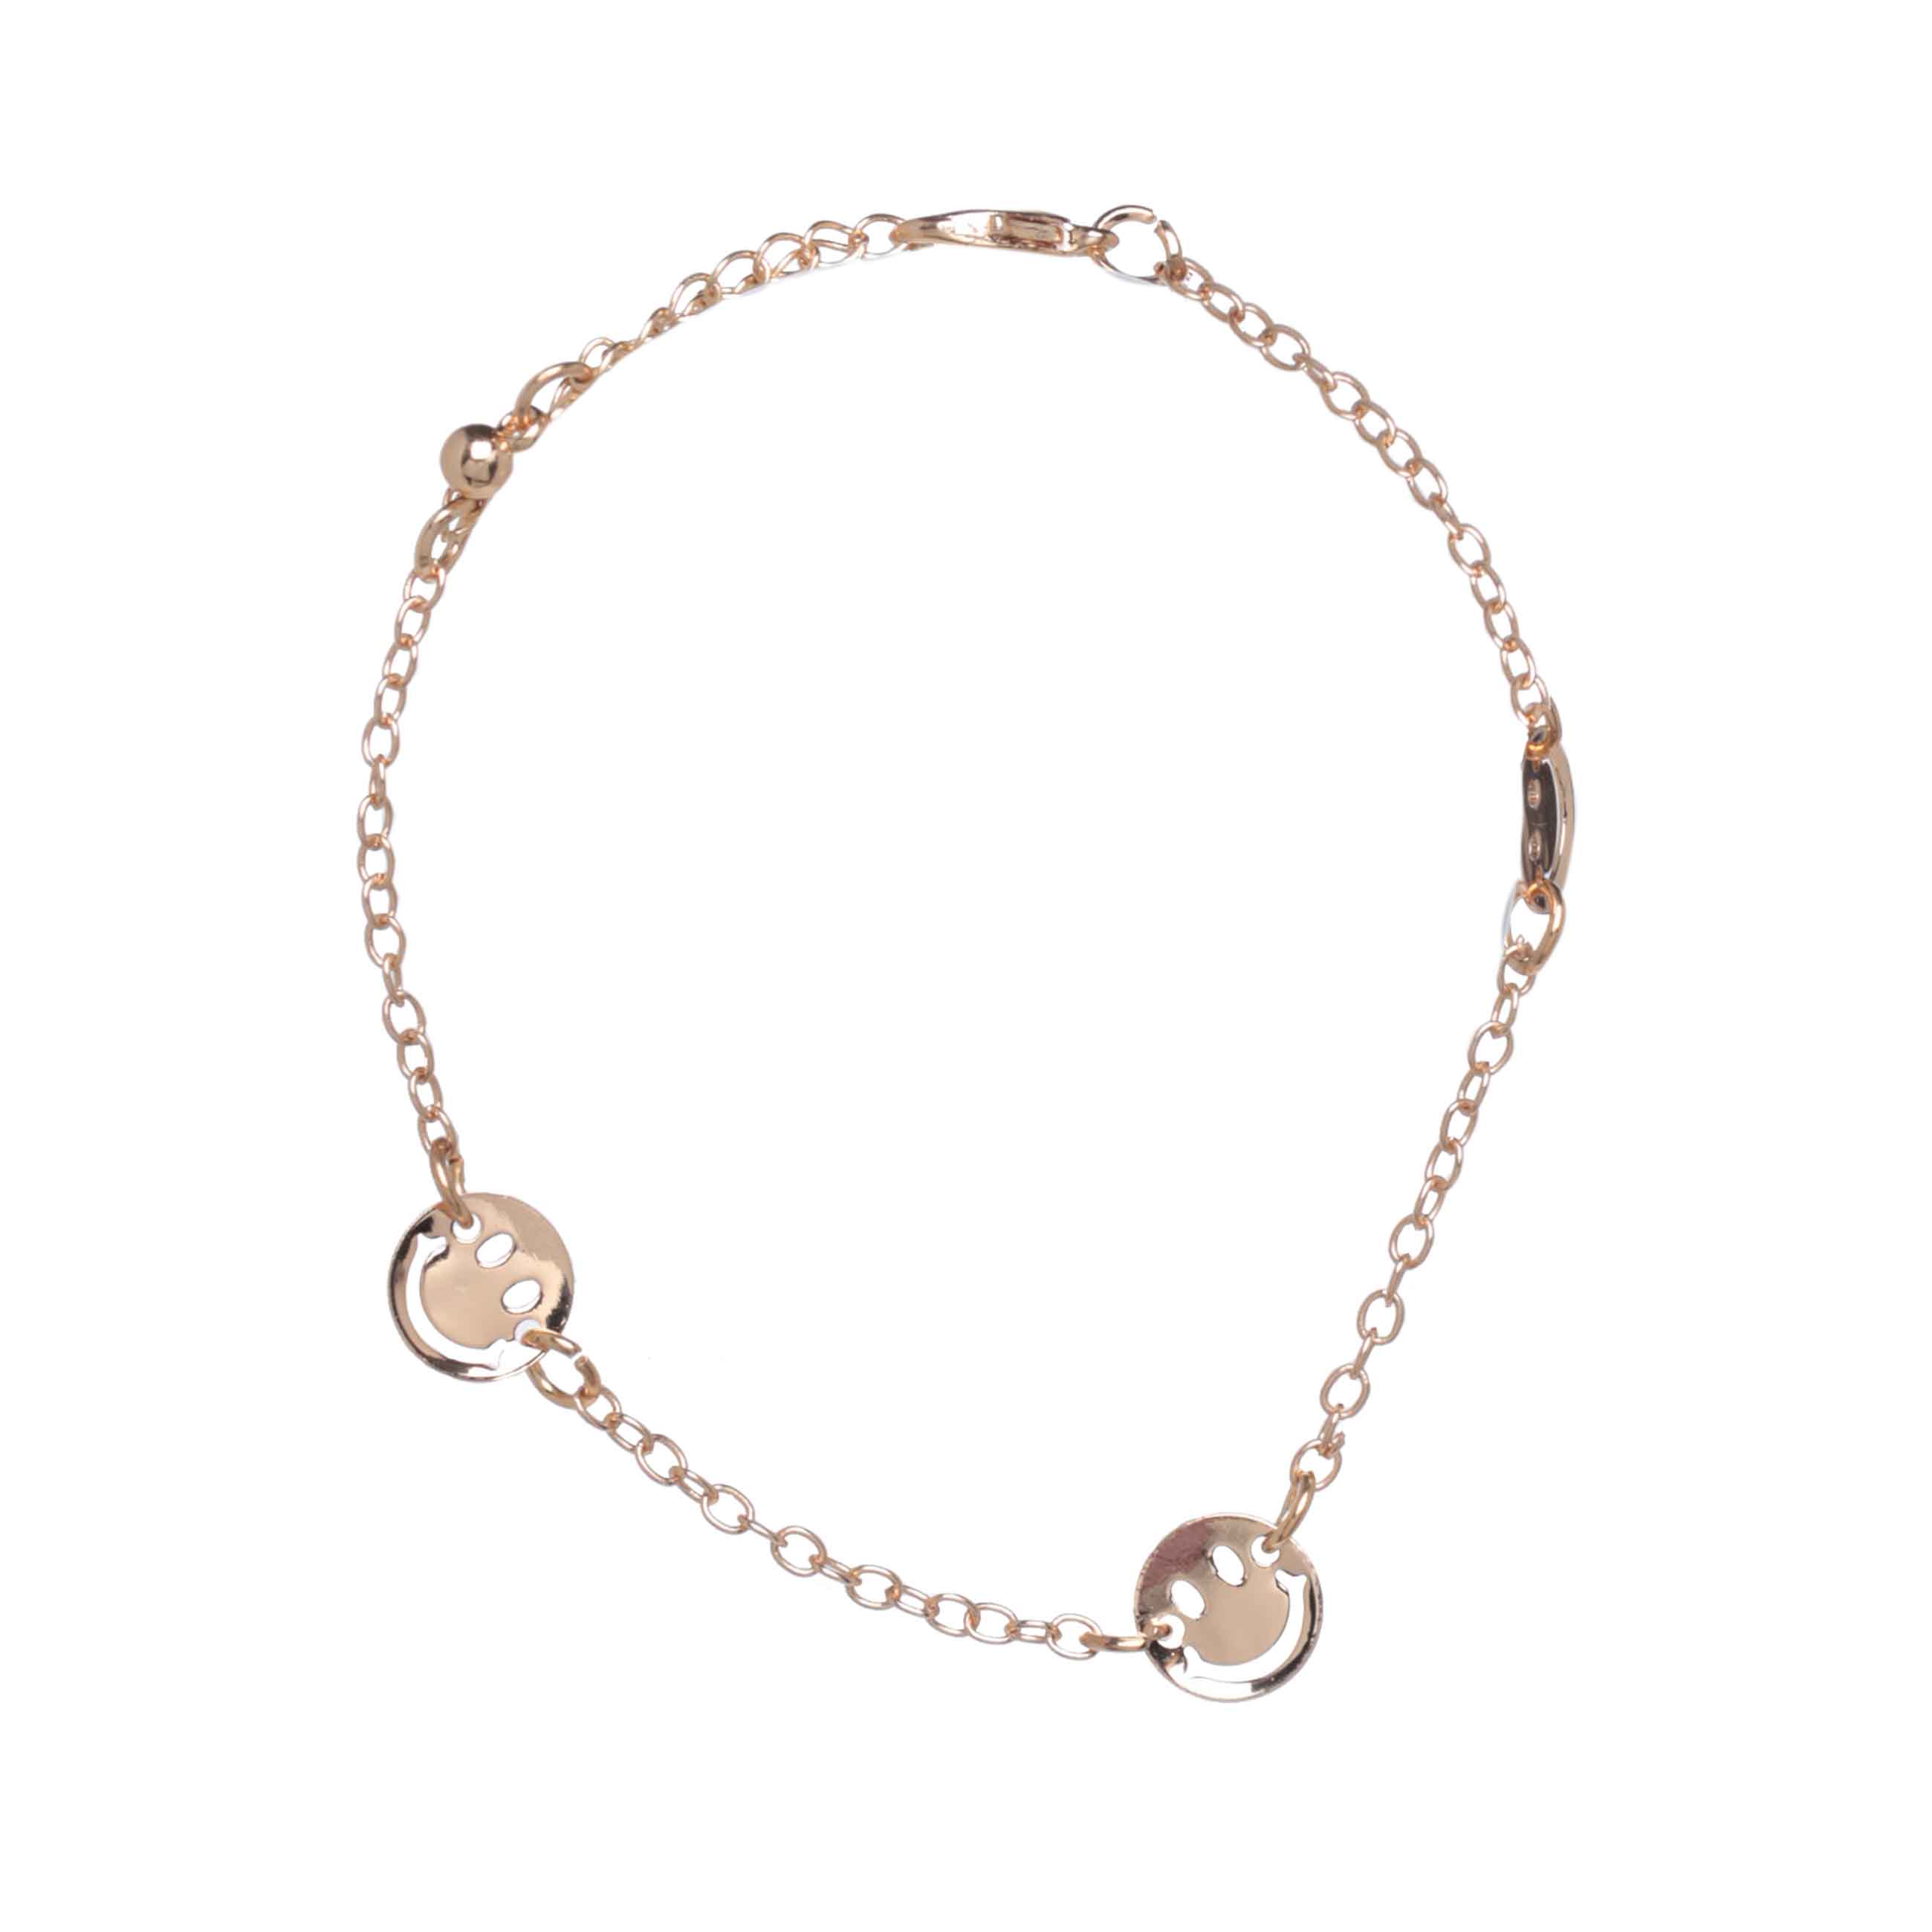 Bracelet, 23 cm, 3 pieces, for children, metal / plastic, colored, Smileys and beads, Pearl color изображение № 4